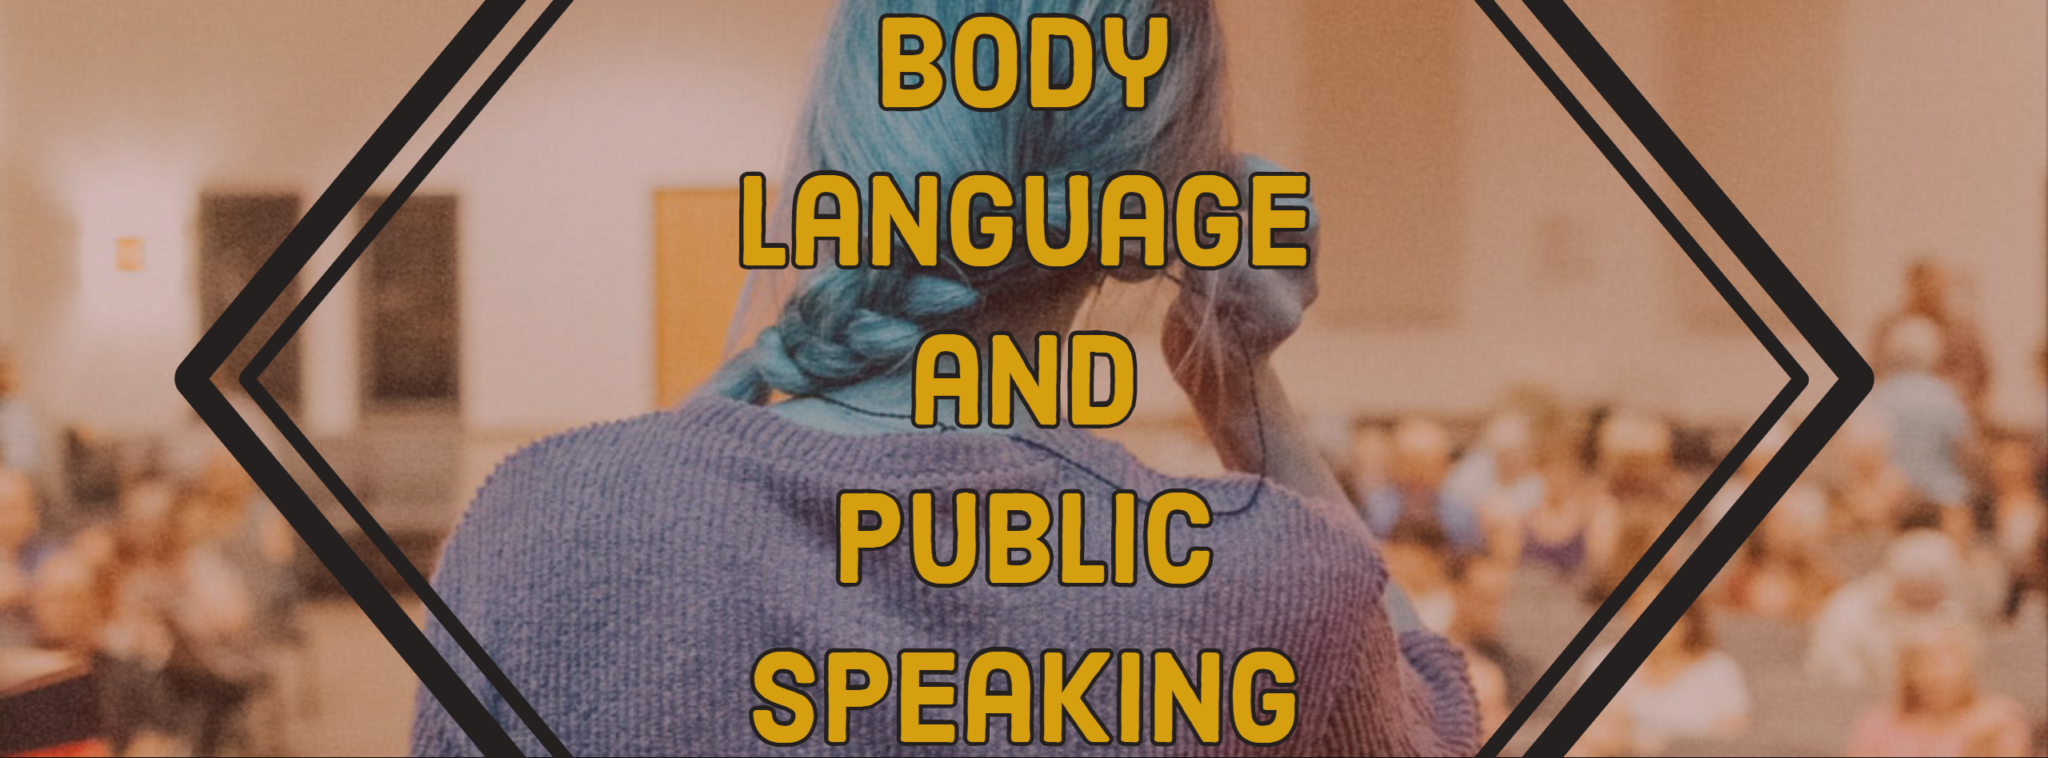 Body Language and Public Speaking